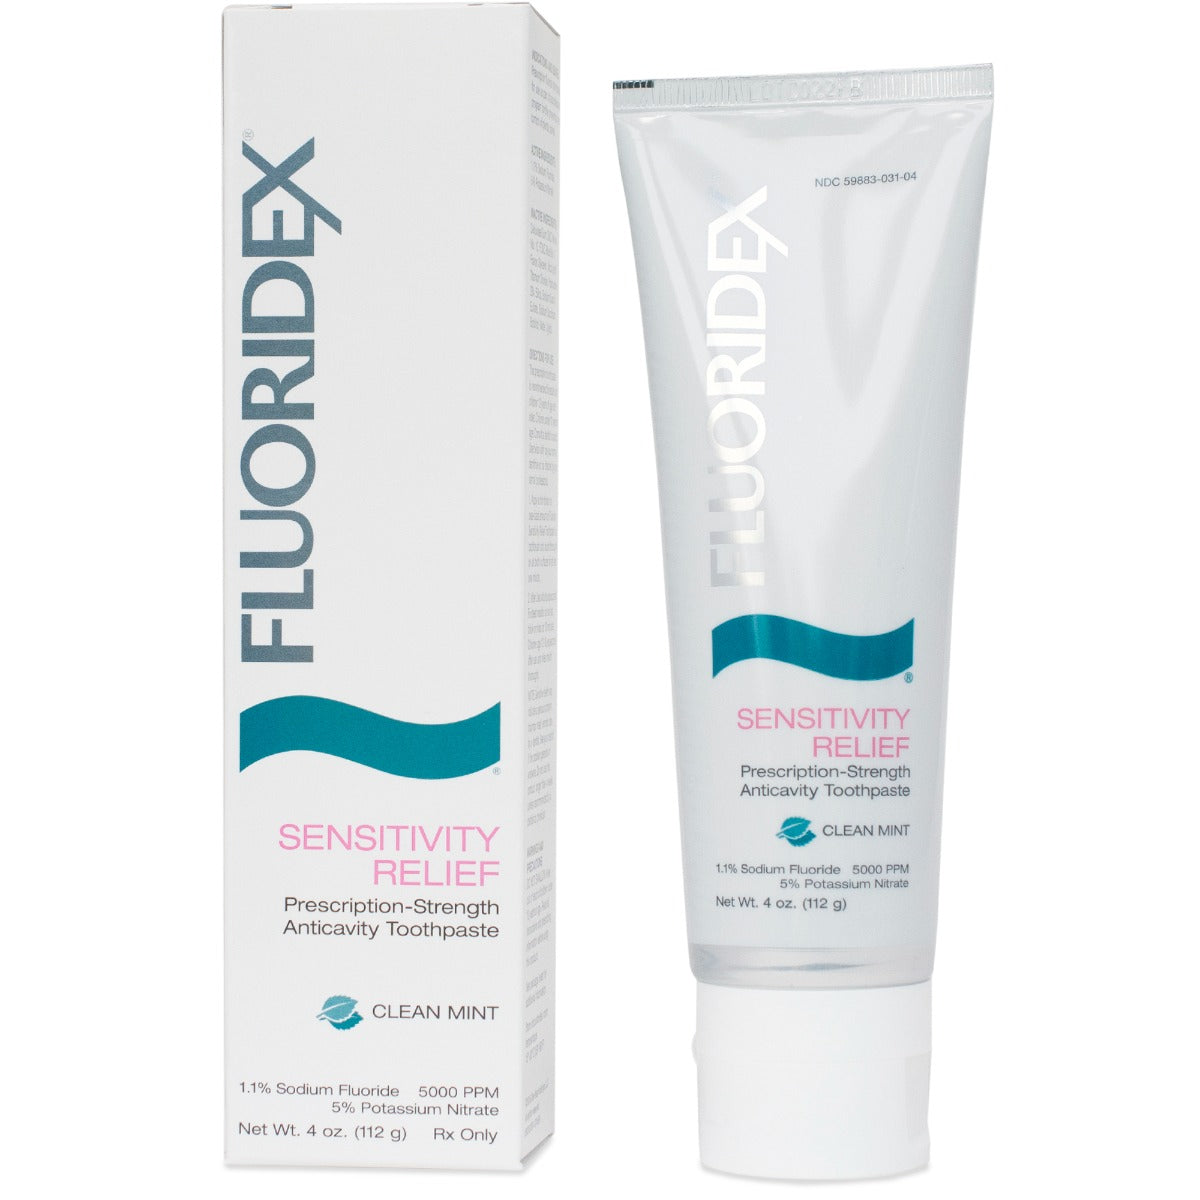 Fluoridex Sensitivity Relief 5000ppm 1.1 sodium fluoride toothpaste